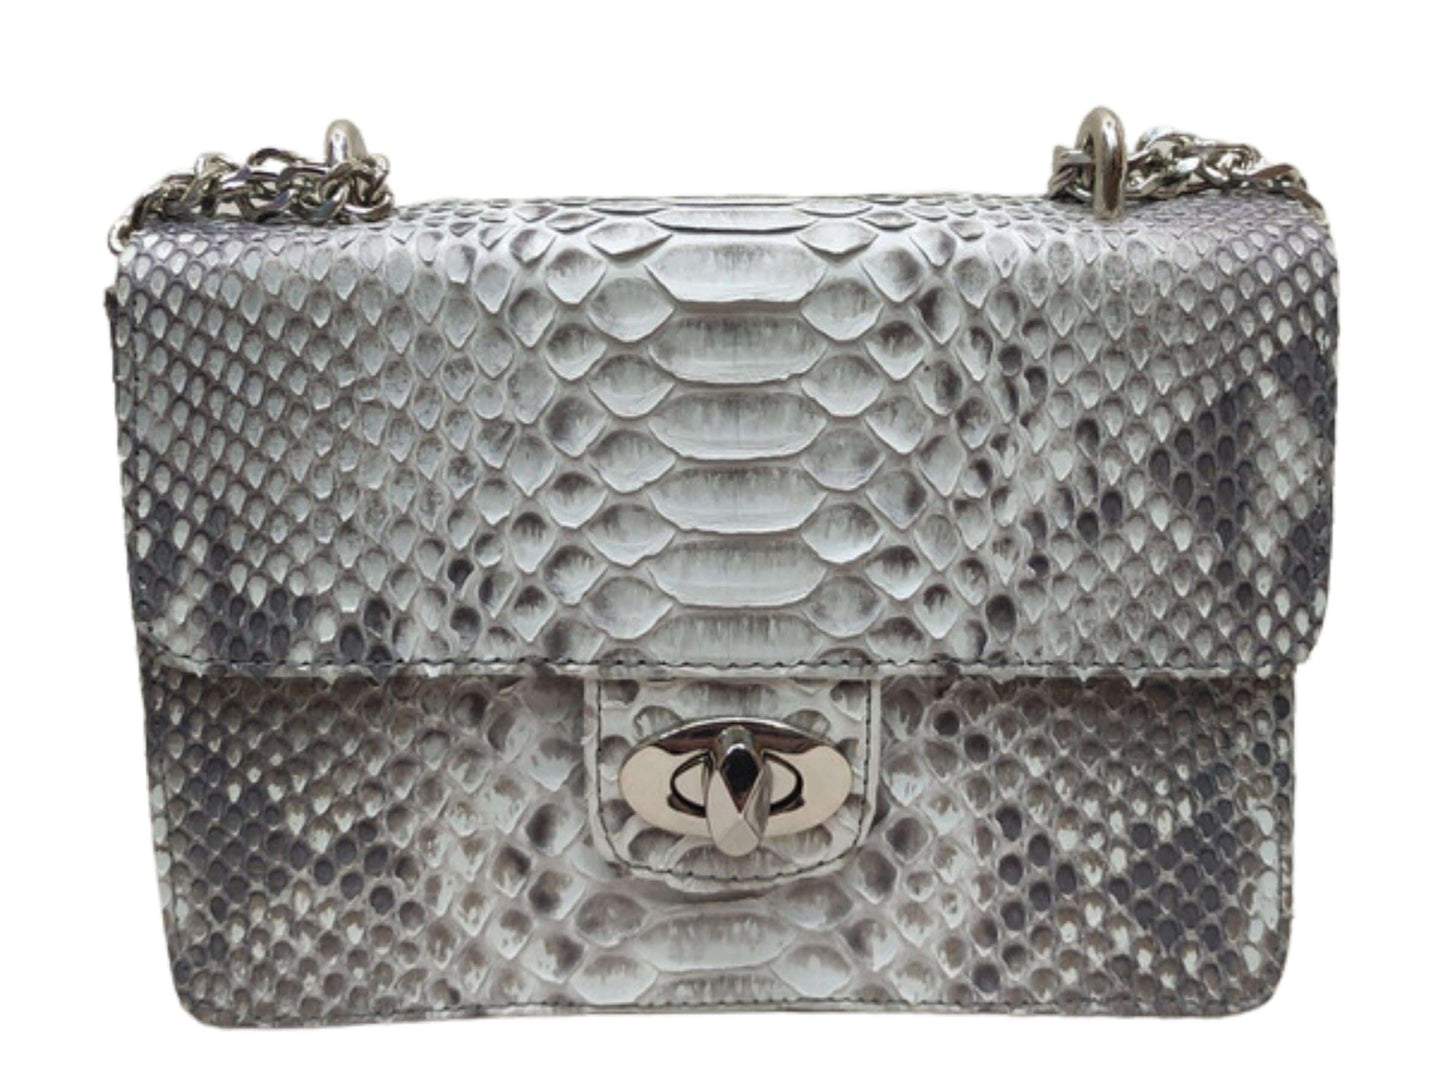 Python Bags Snakeskin Evening Handbag for Women Gray Python Jacket by LFM Fashion